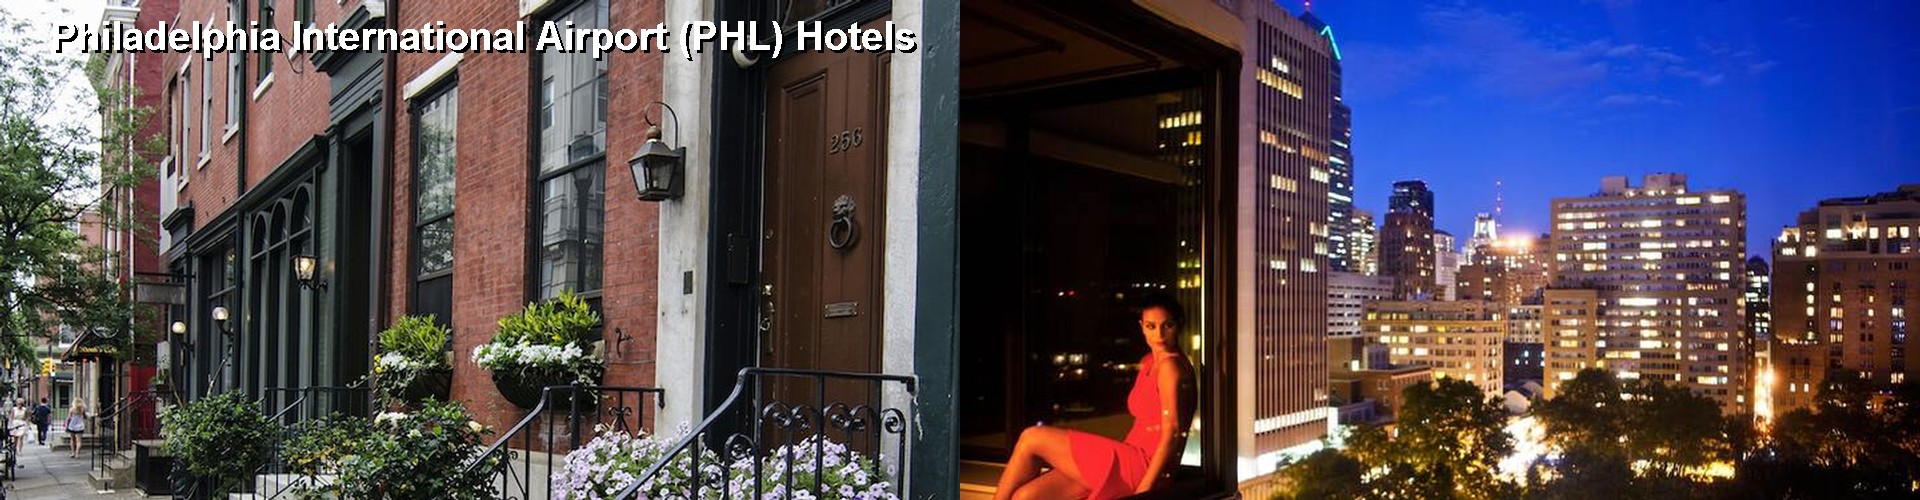 1 Best Hotels near Philadelphia International Airport (PHL)